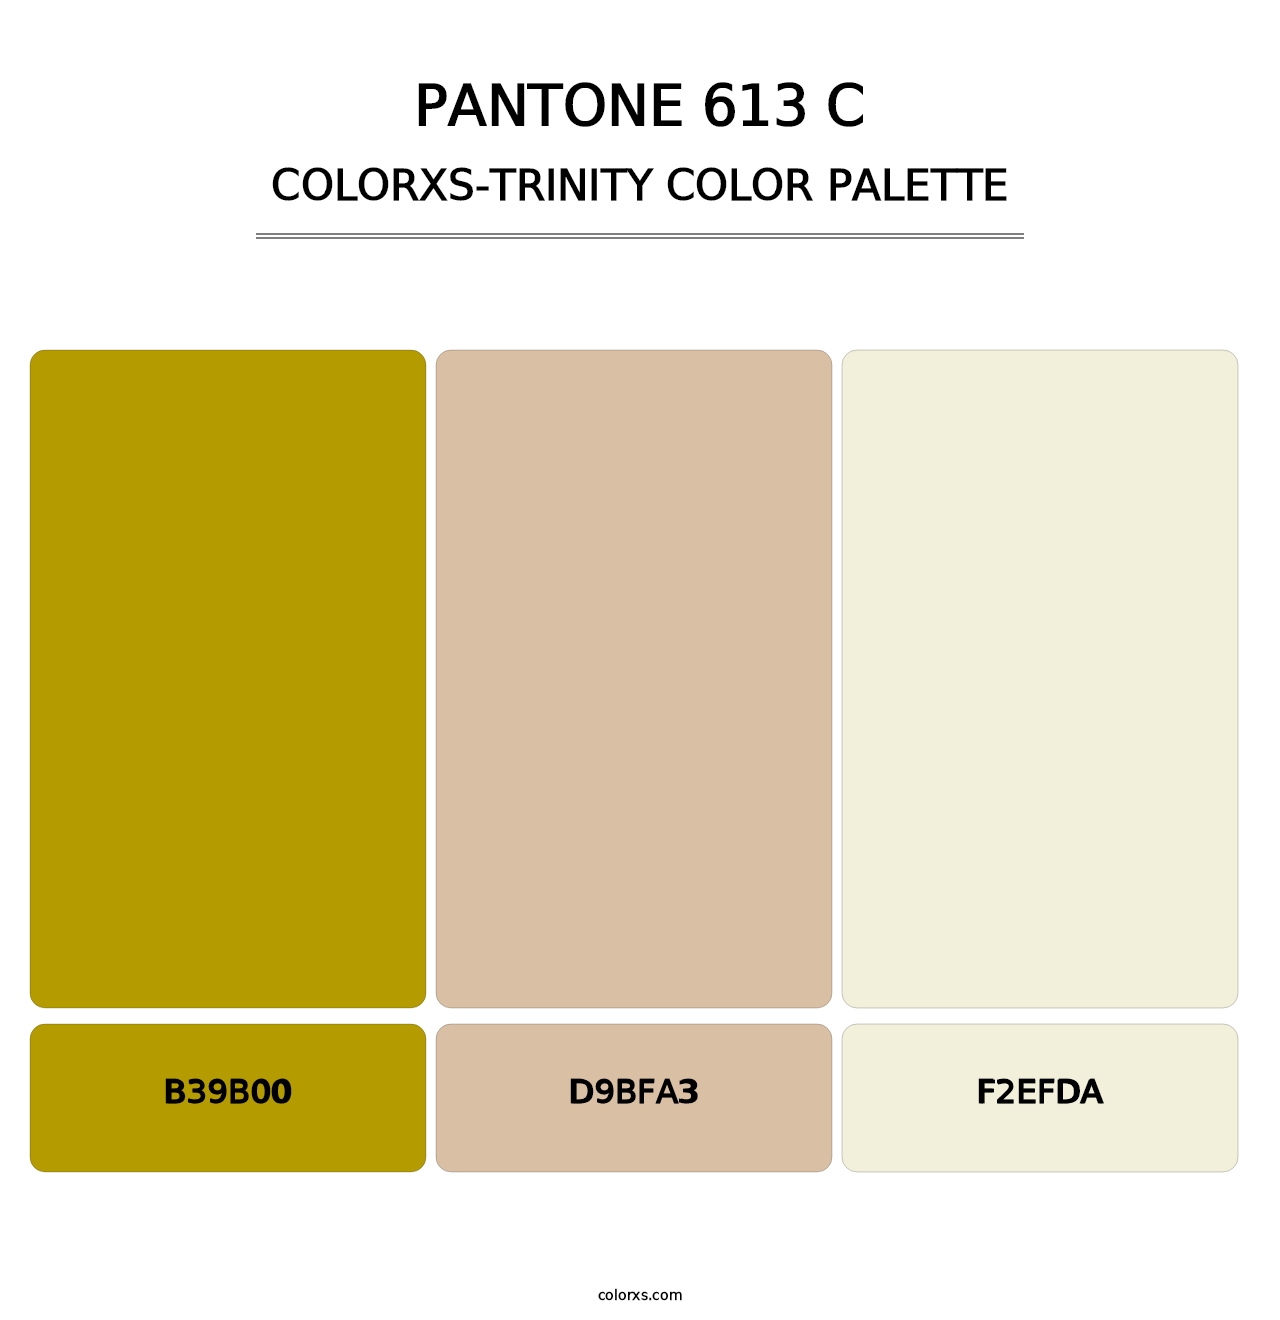 PANTONE 613 C - Colorxs Trinity Palette